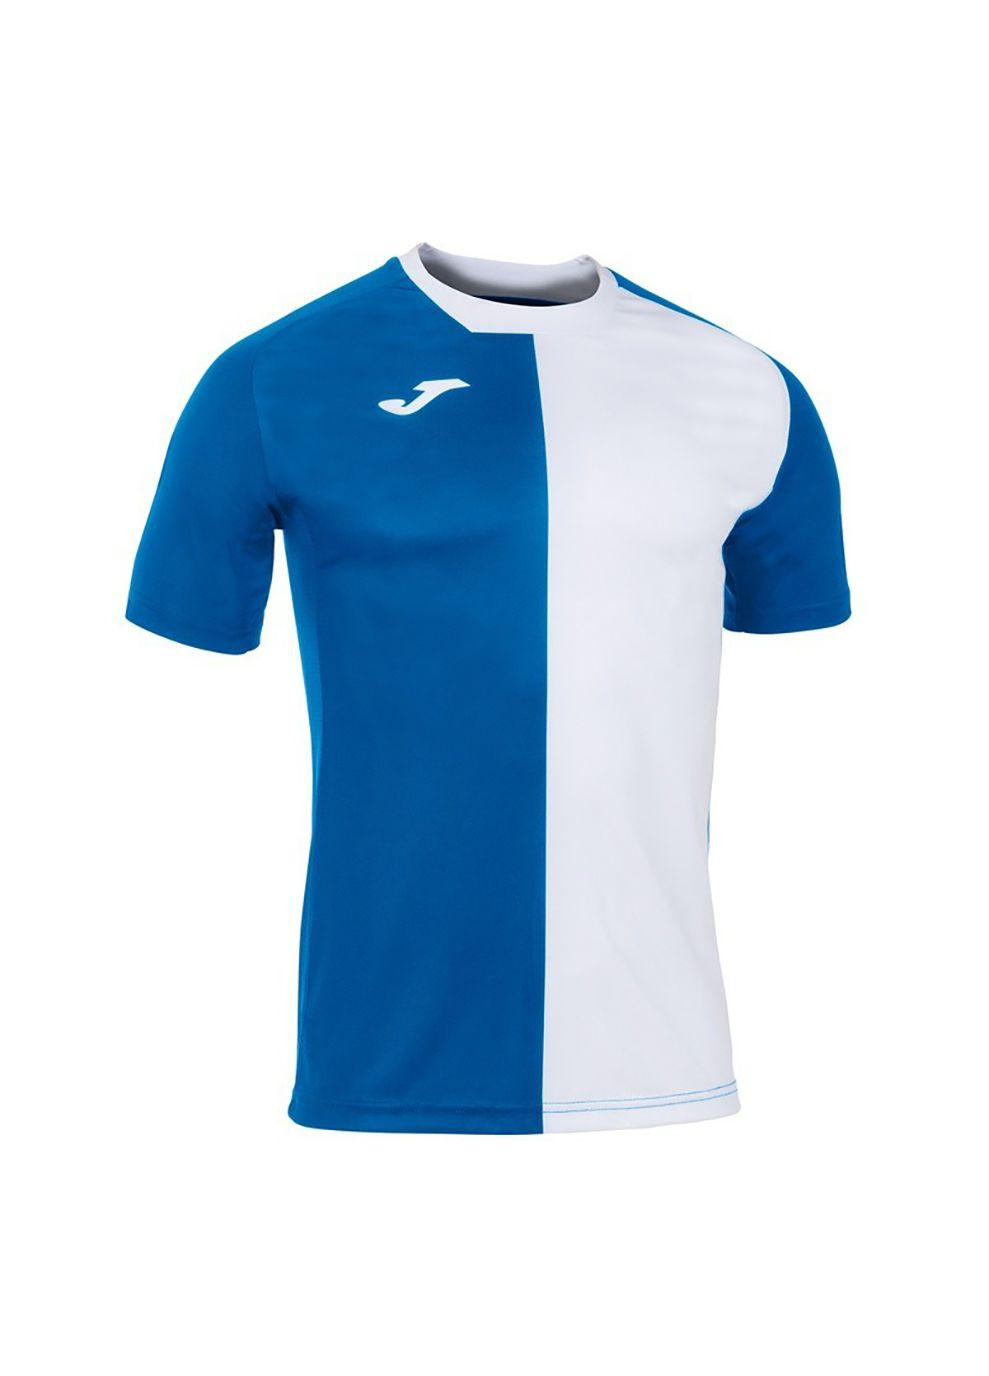 Комбинированная футболка city t-shirt royal-white s/s синий,белый 101546.702 Joma